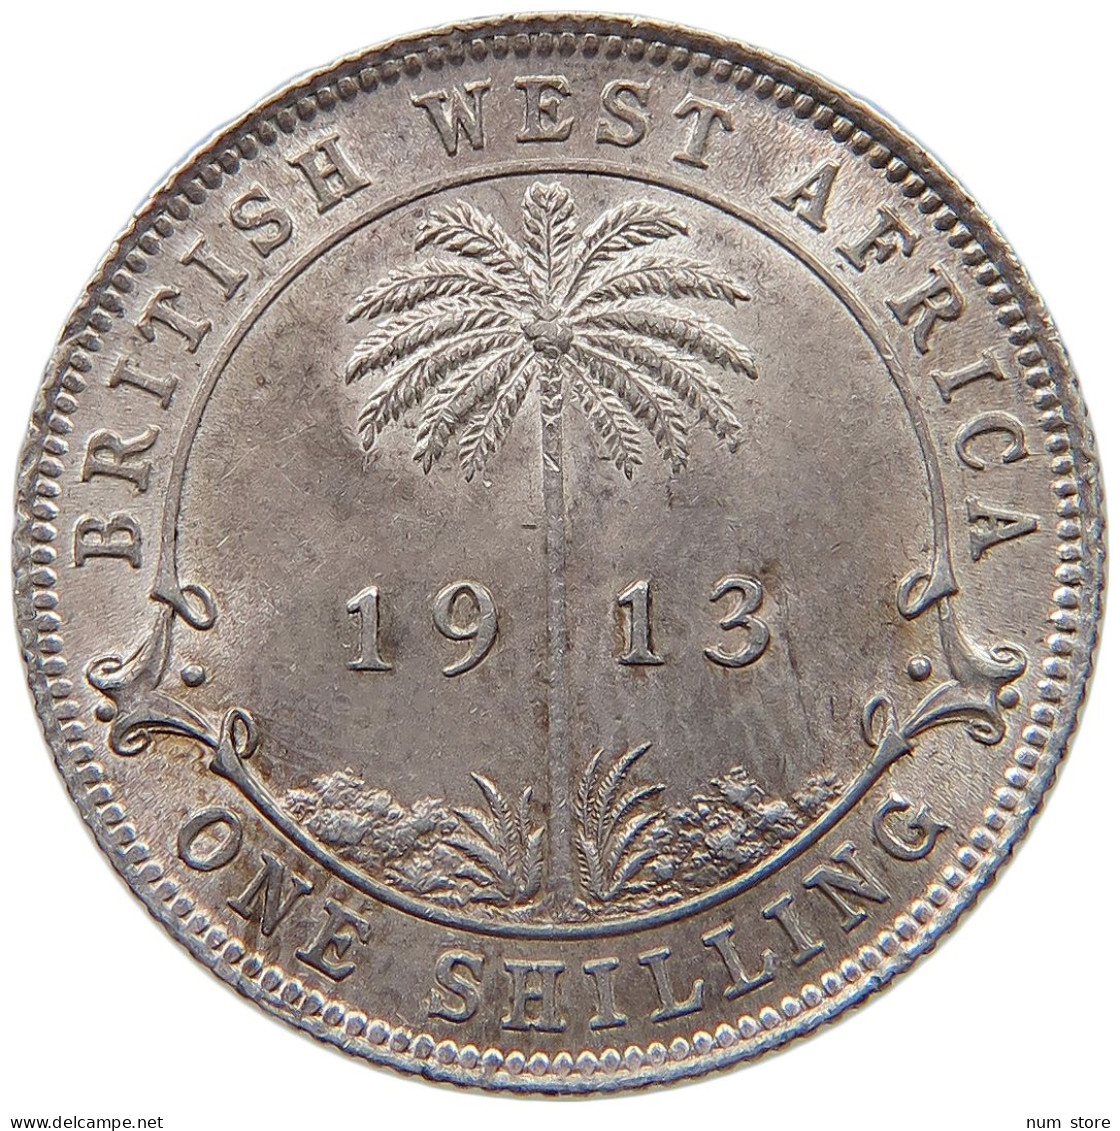 WEST AFRICA SHILLING 1913 George V. (1910-1936) #t111 1123 - Colecciones